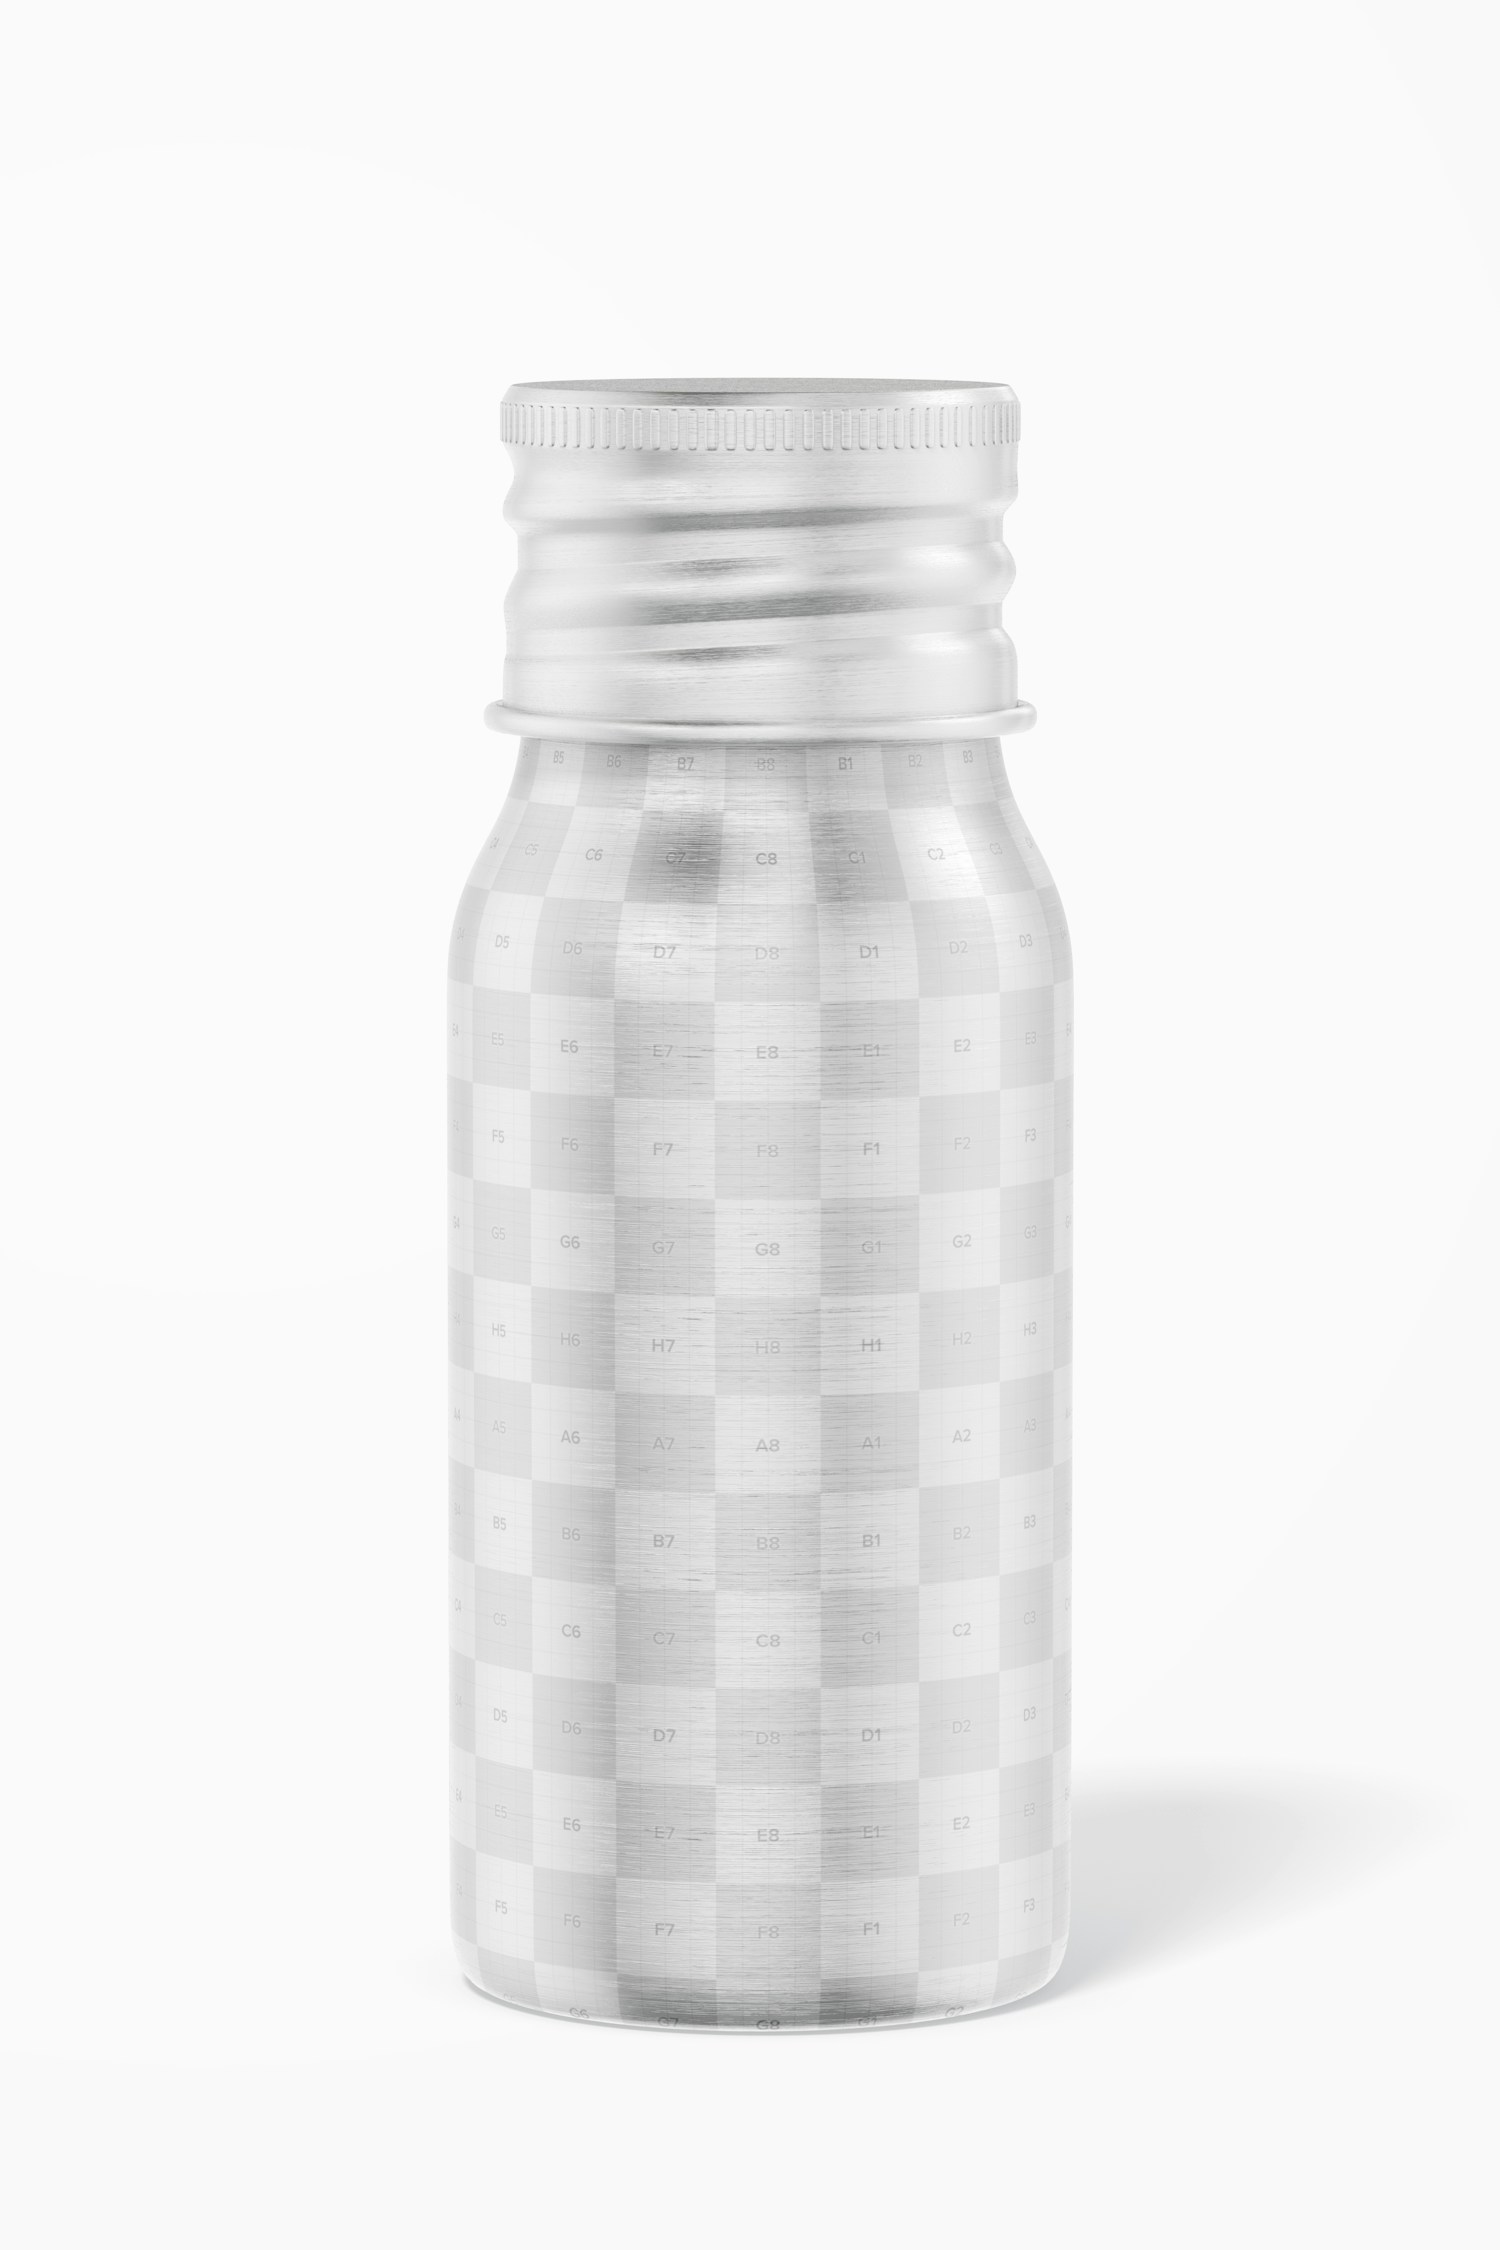 1 oz Aluminium Bottle Mockup, Front View